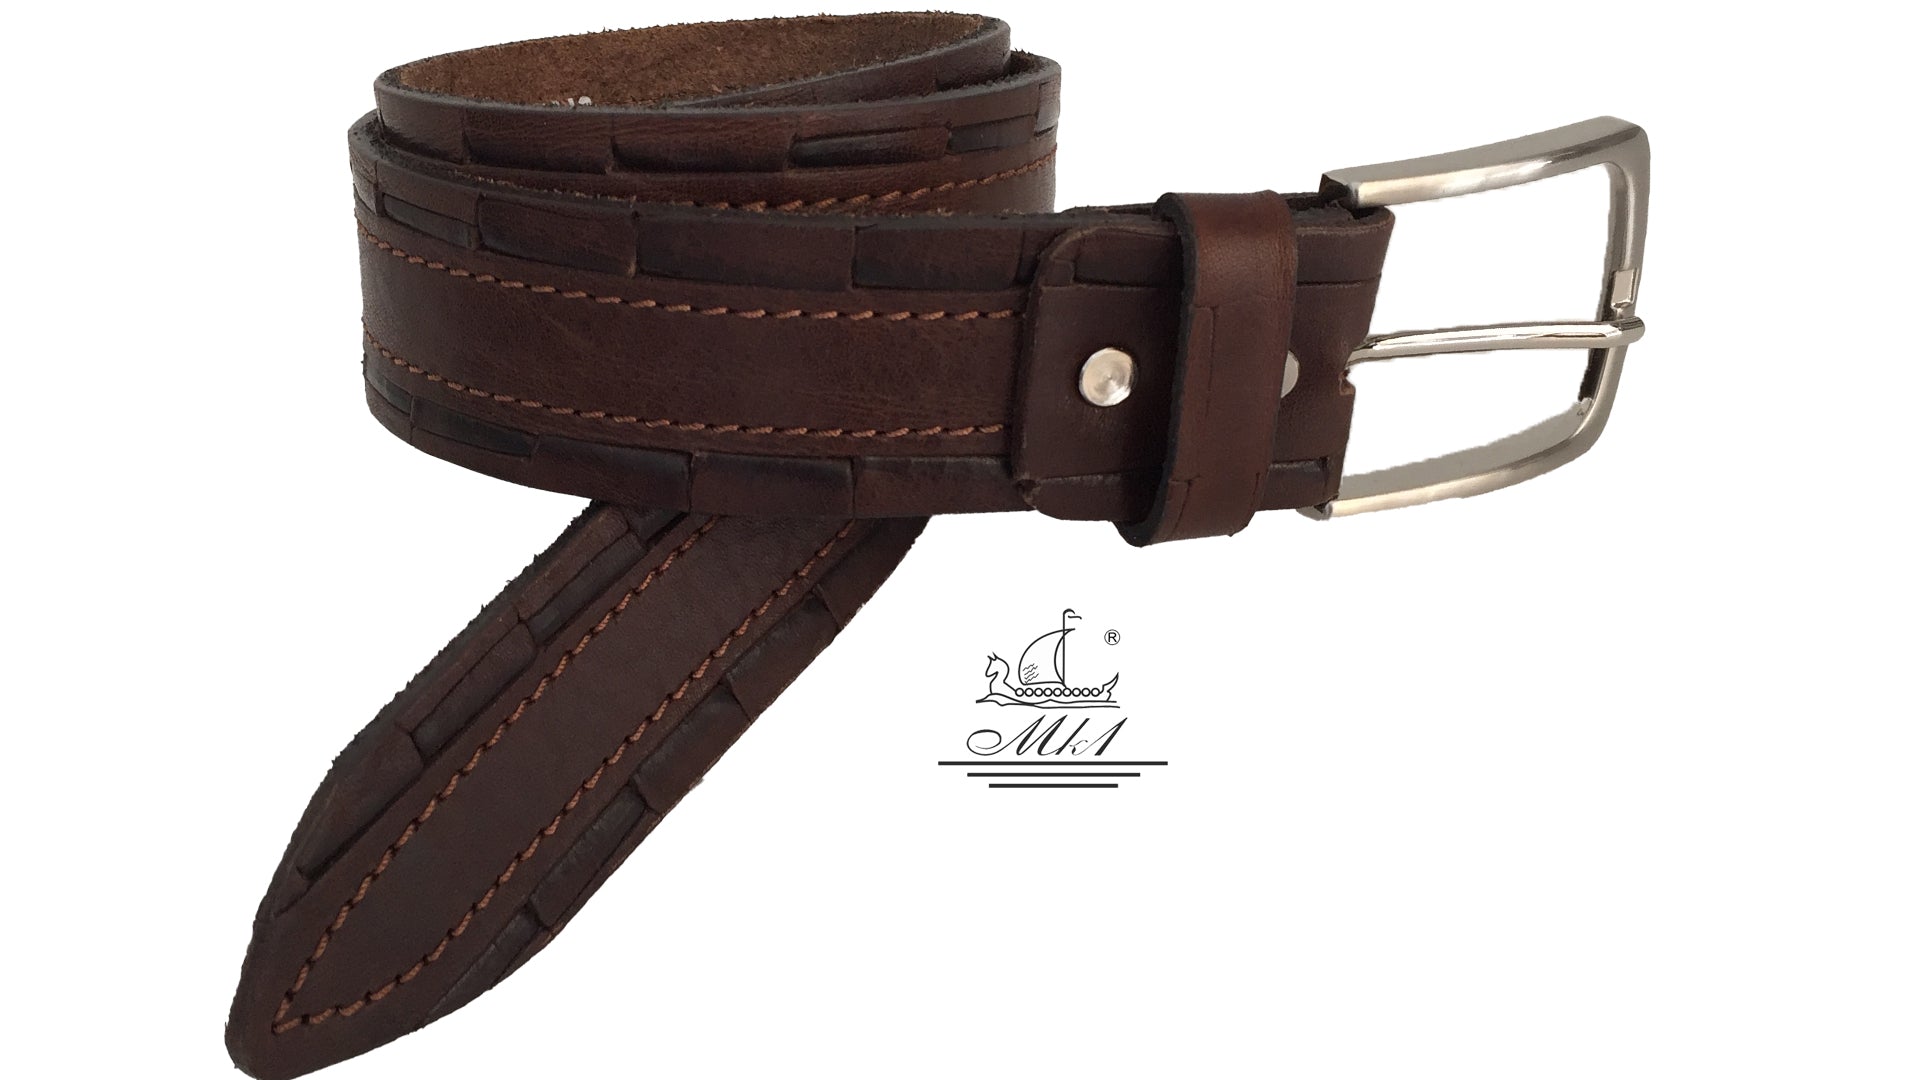 n2699/40k-krp-g Hand made leather belt